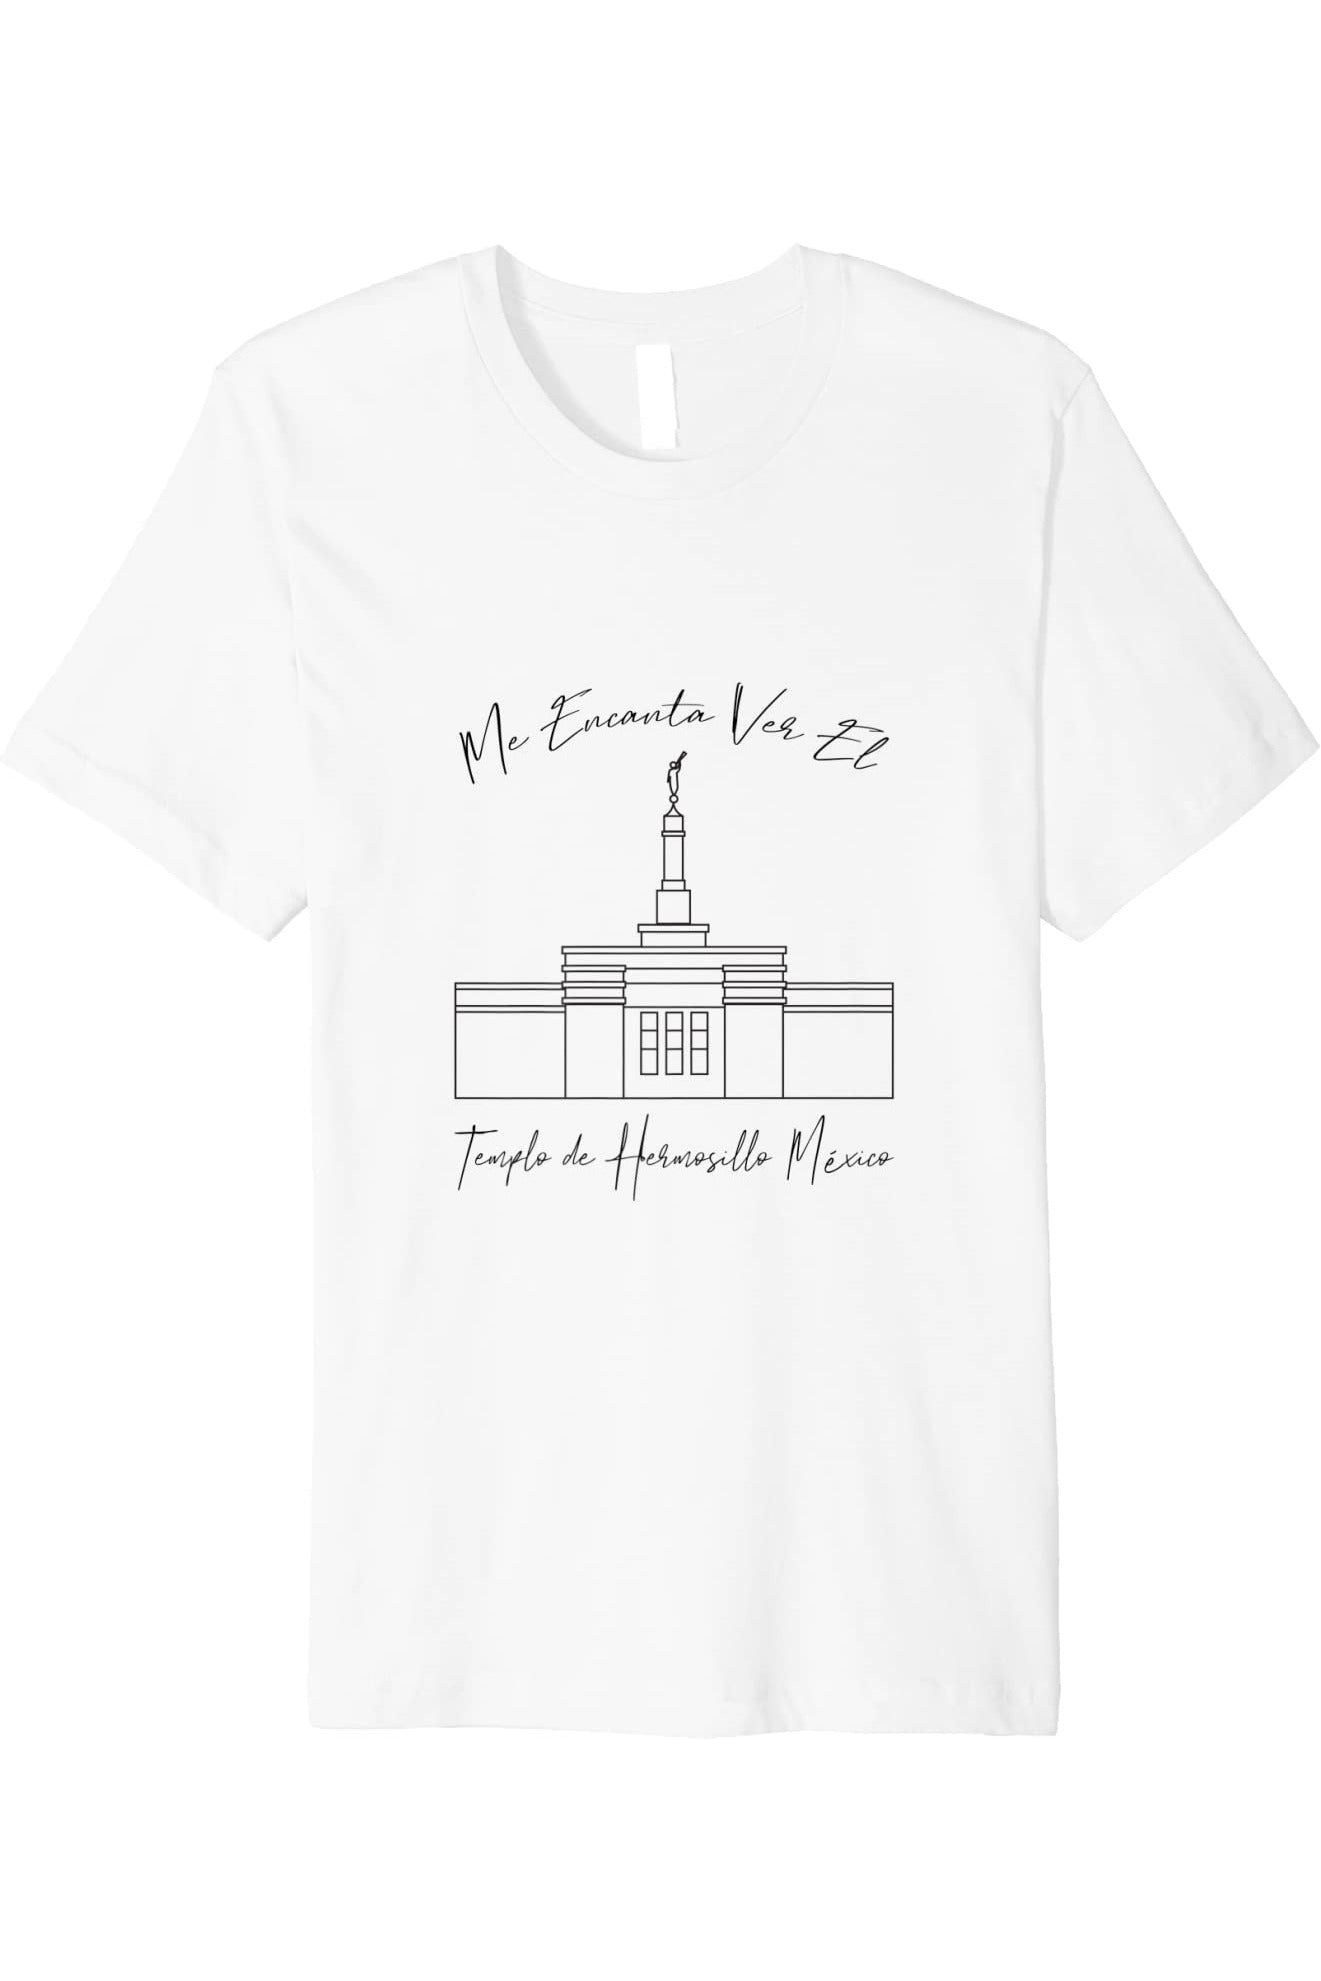 Hermosillo Mexico Temple T-Shirt - Premium - Calligraphy Style (Spanish) US